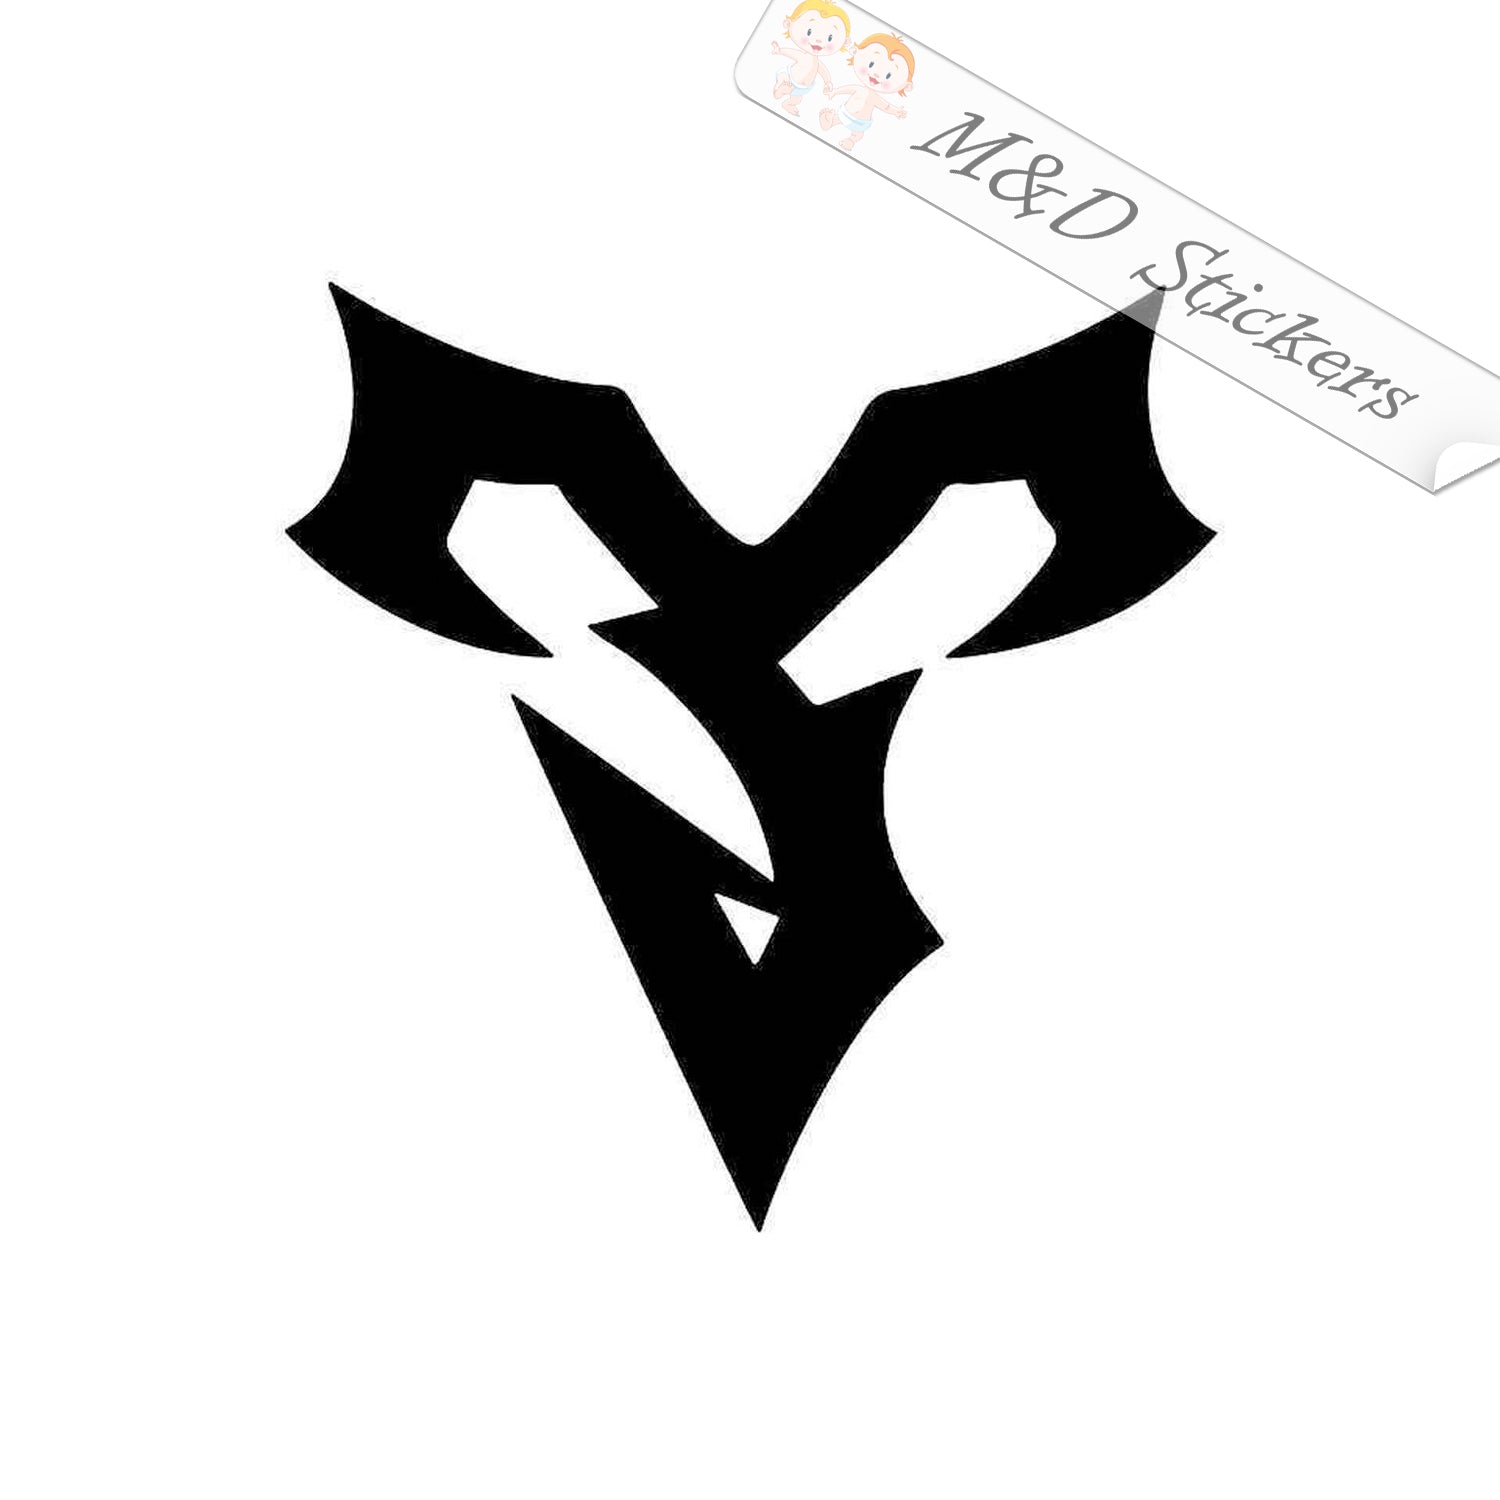 final fantasy x hd logo